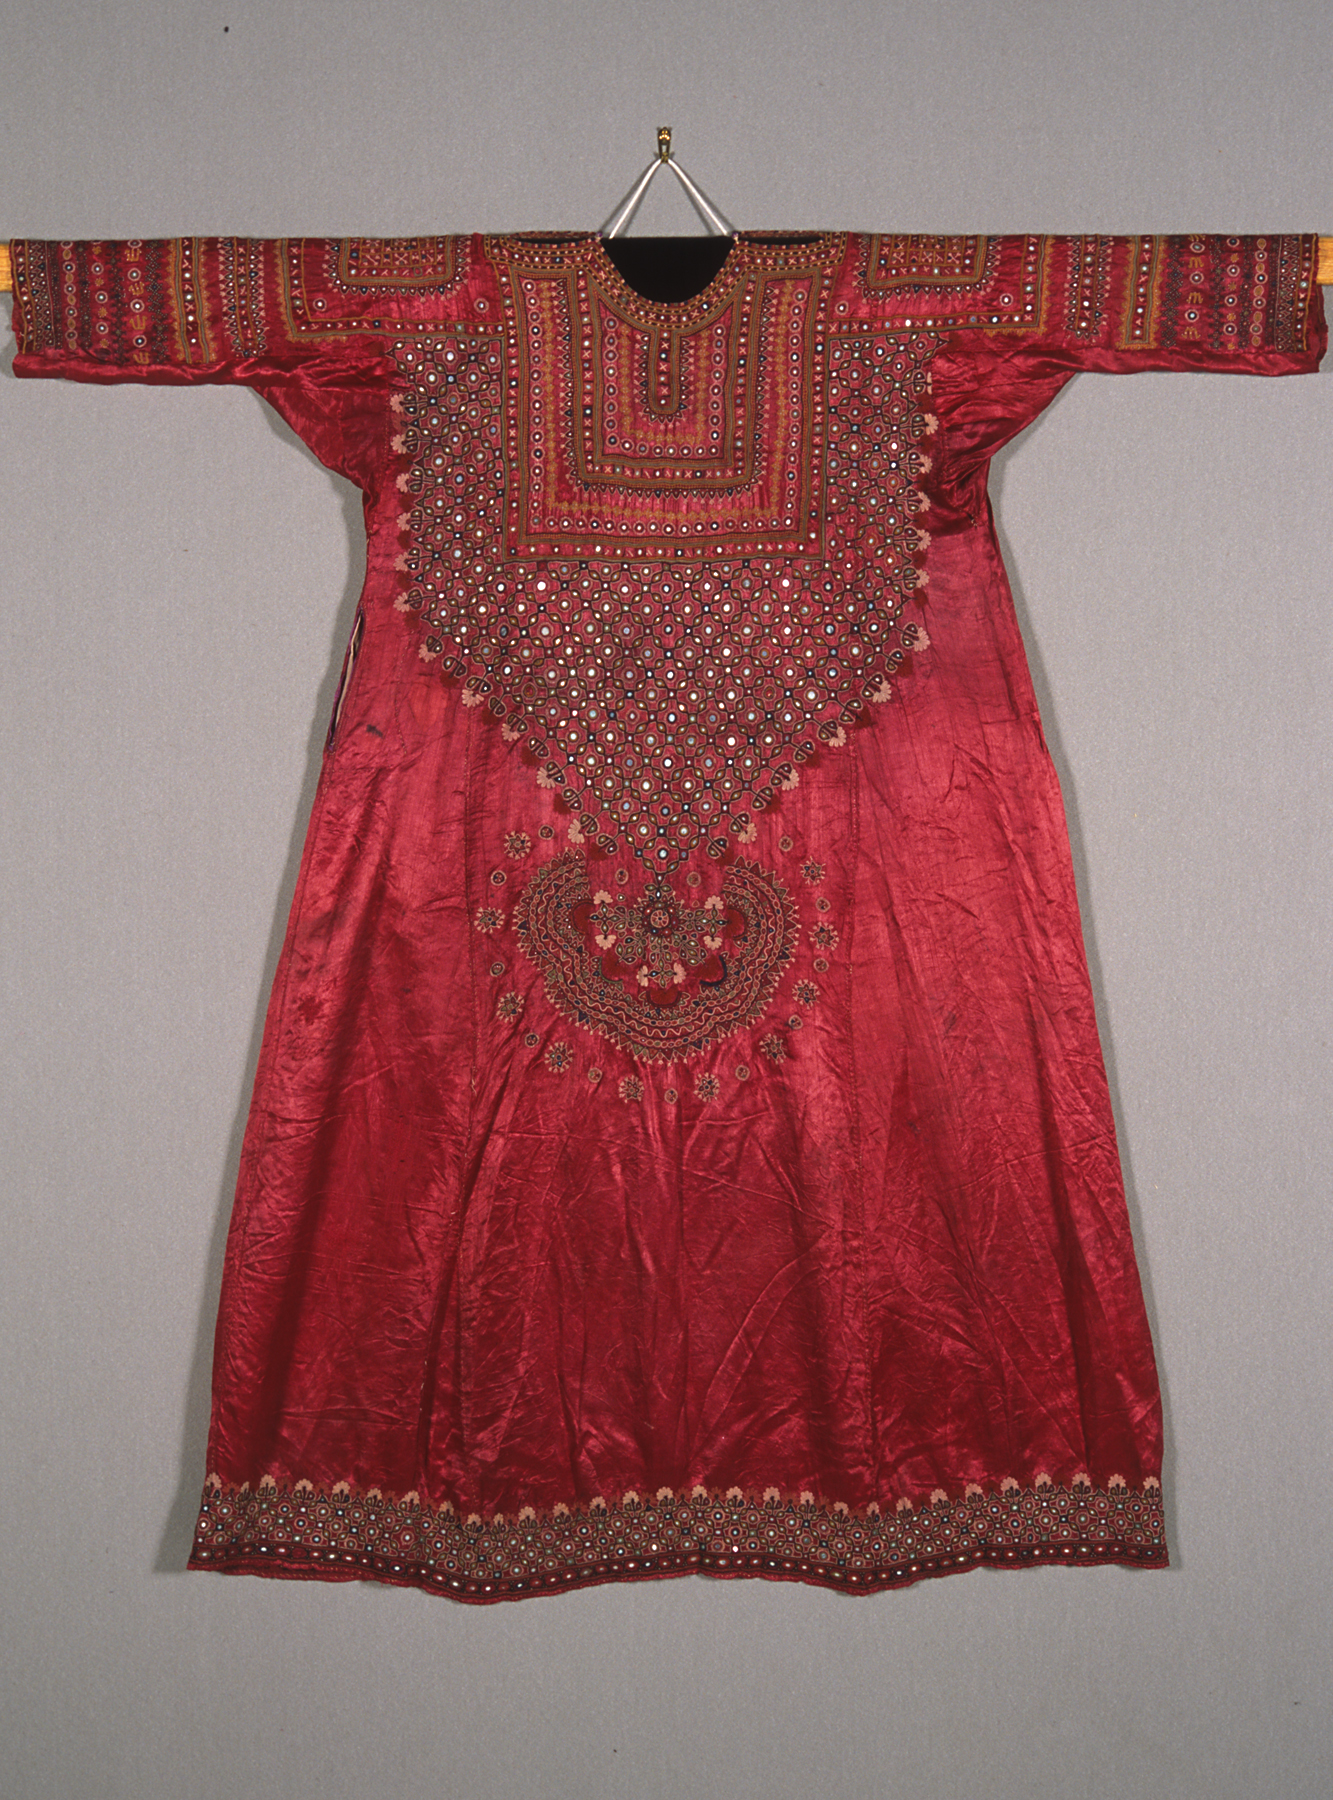 woman's tunic (aba)